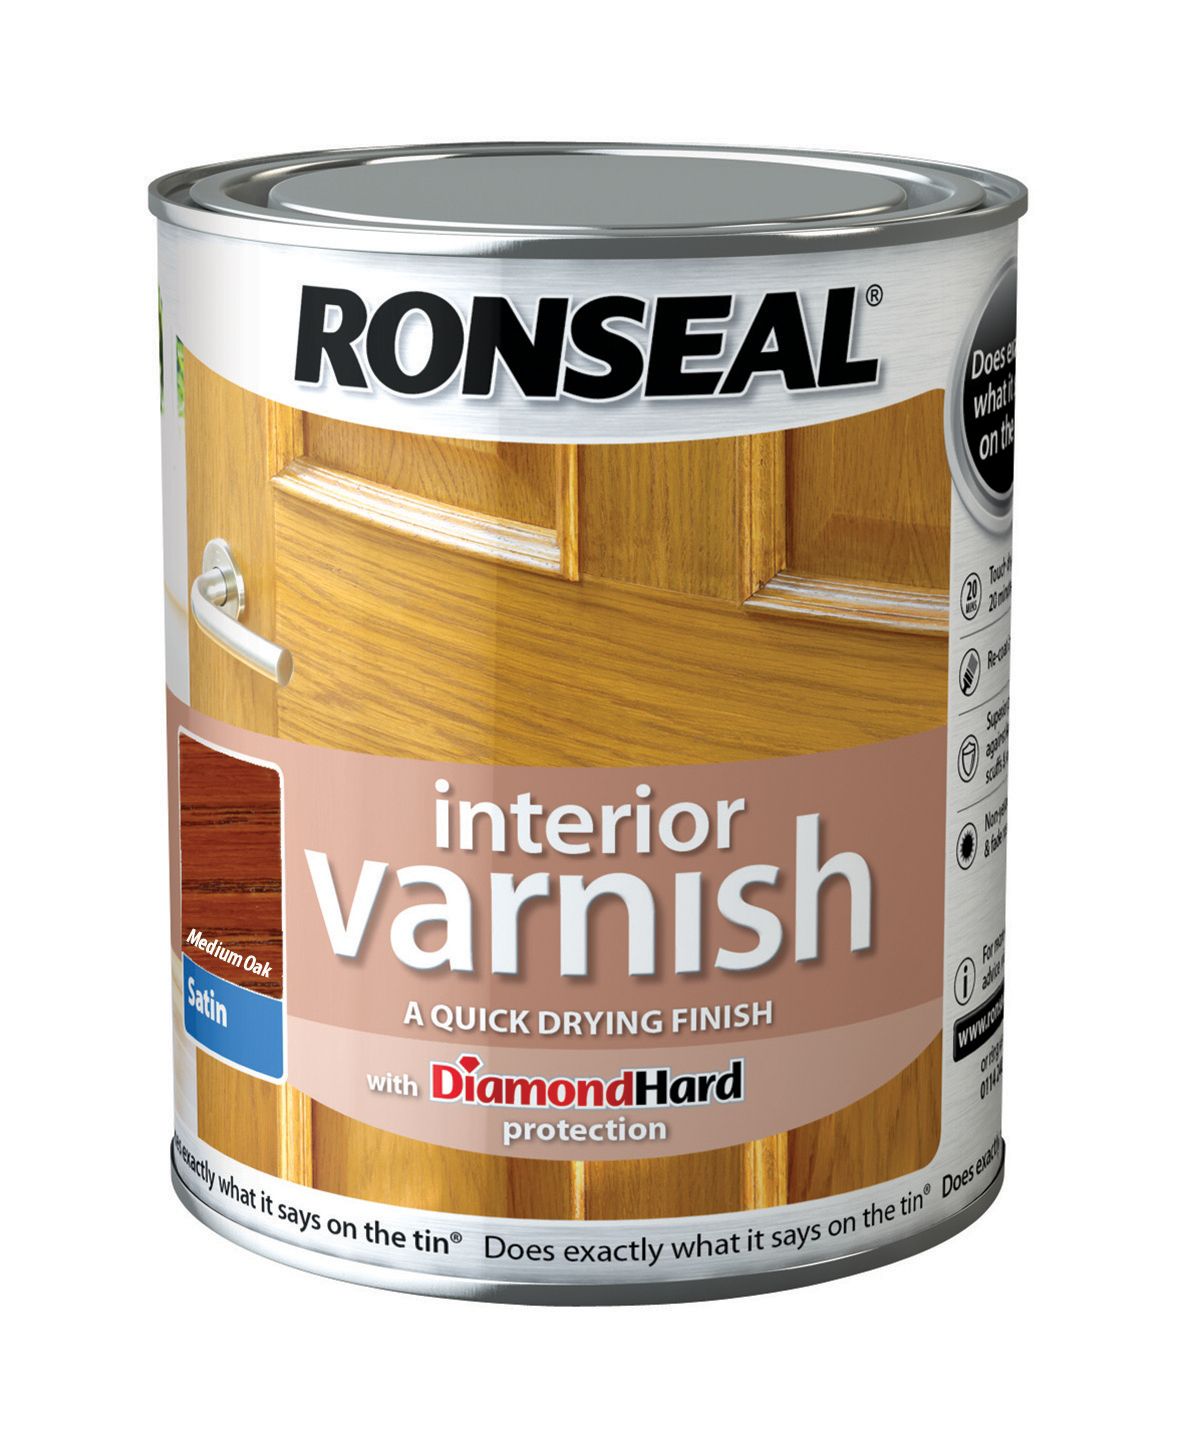 Ronseal Interior Varnish - Satin Medium Oak 750ml